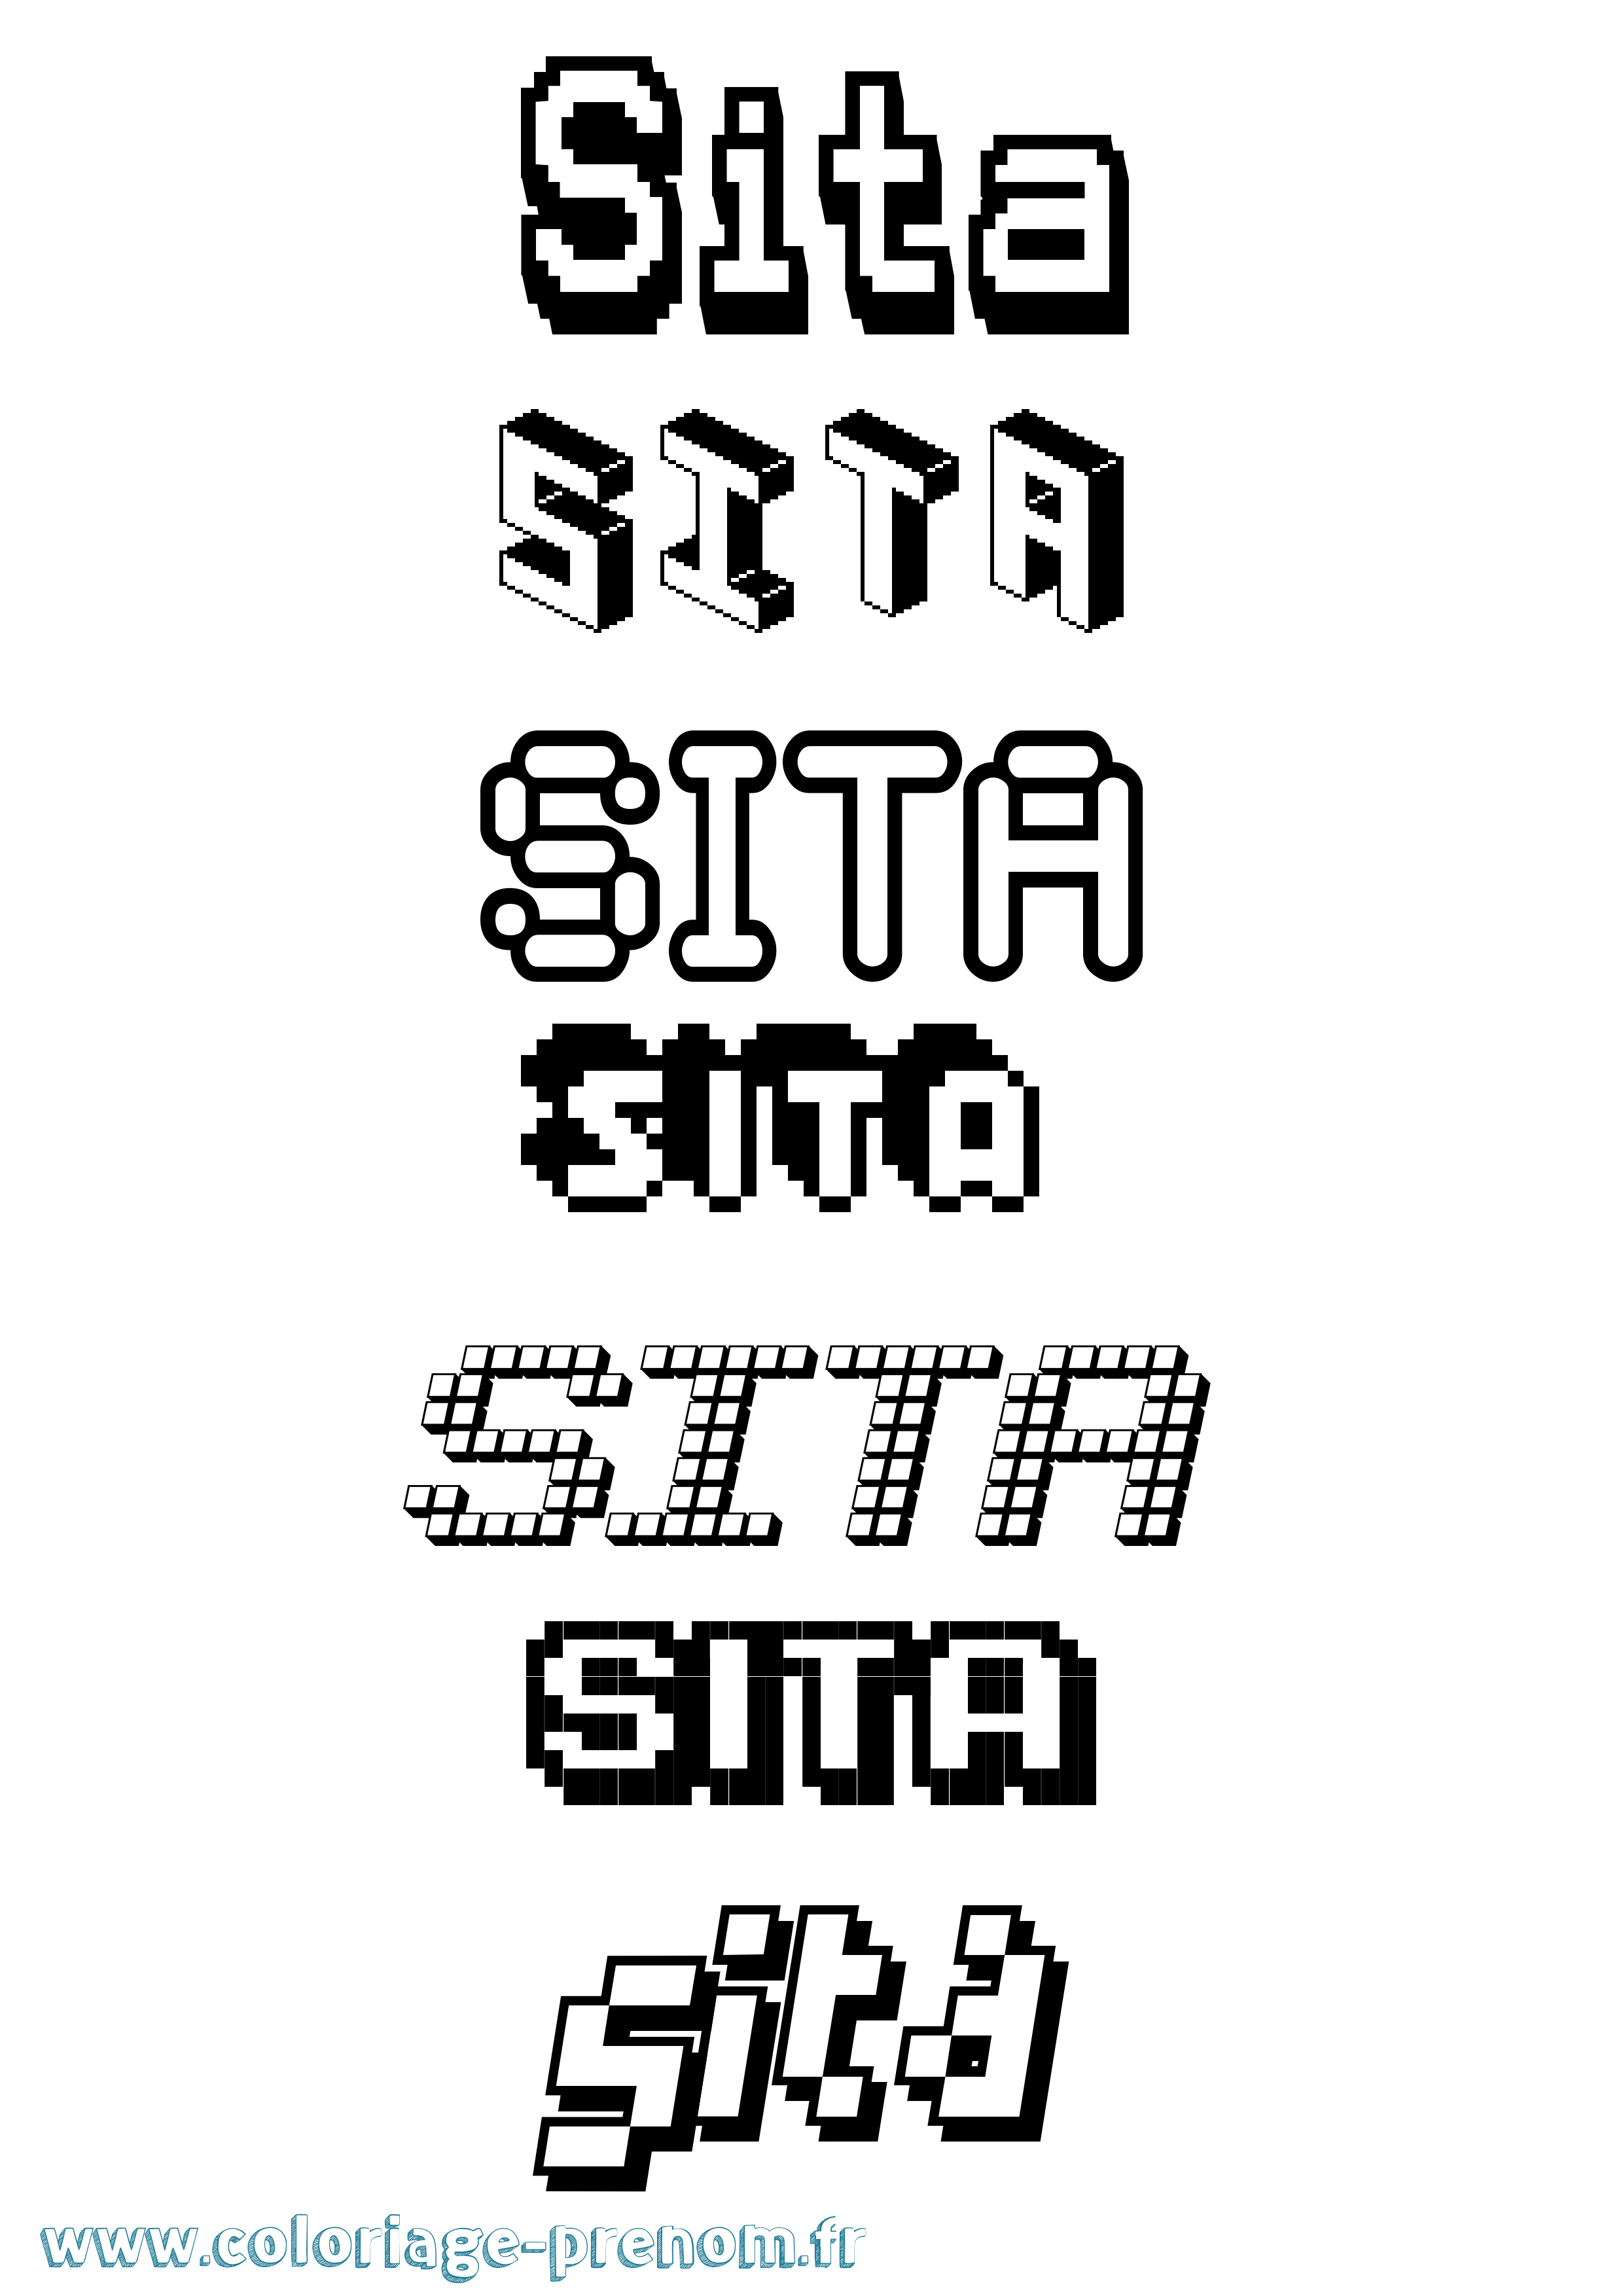 Coloriage prénom Sita Pixel